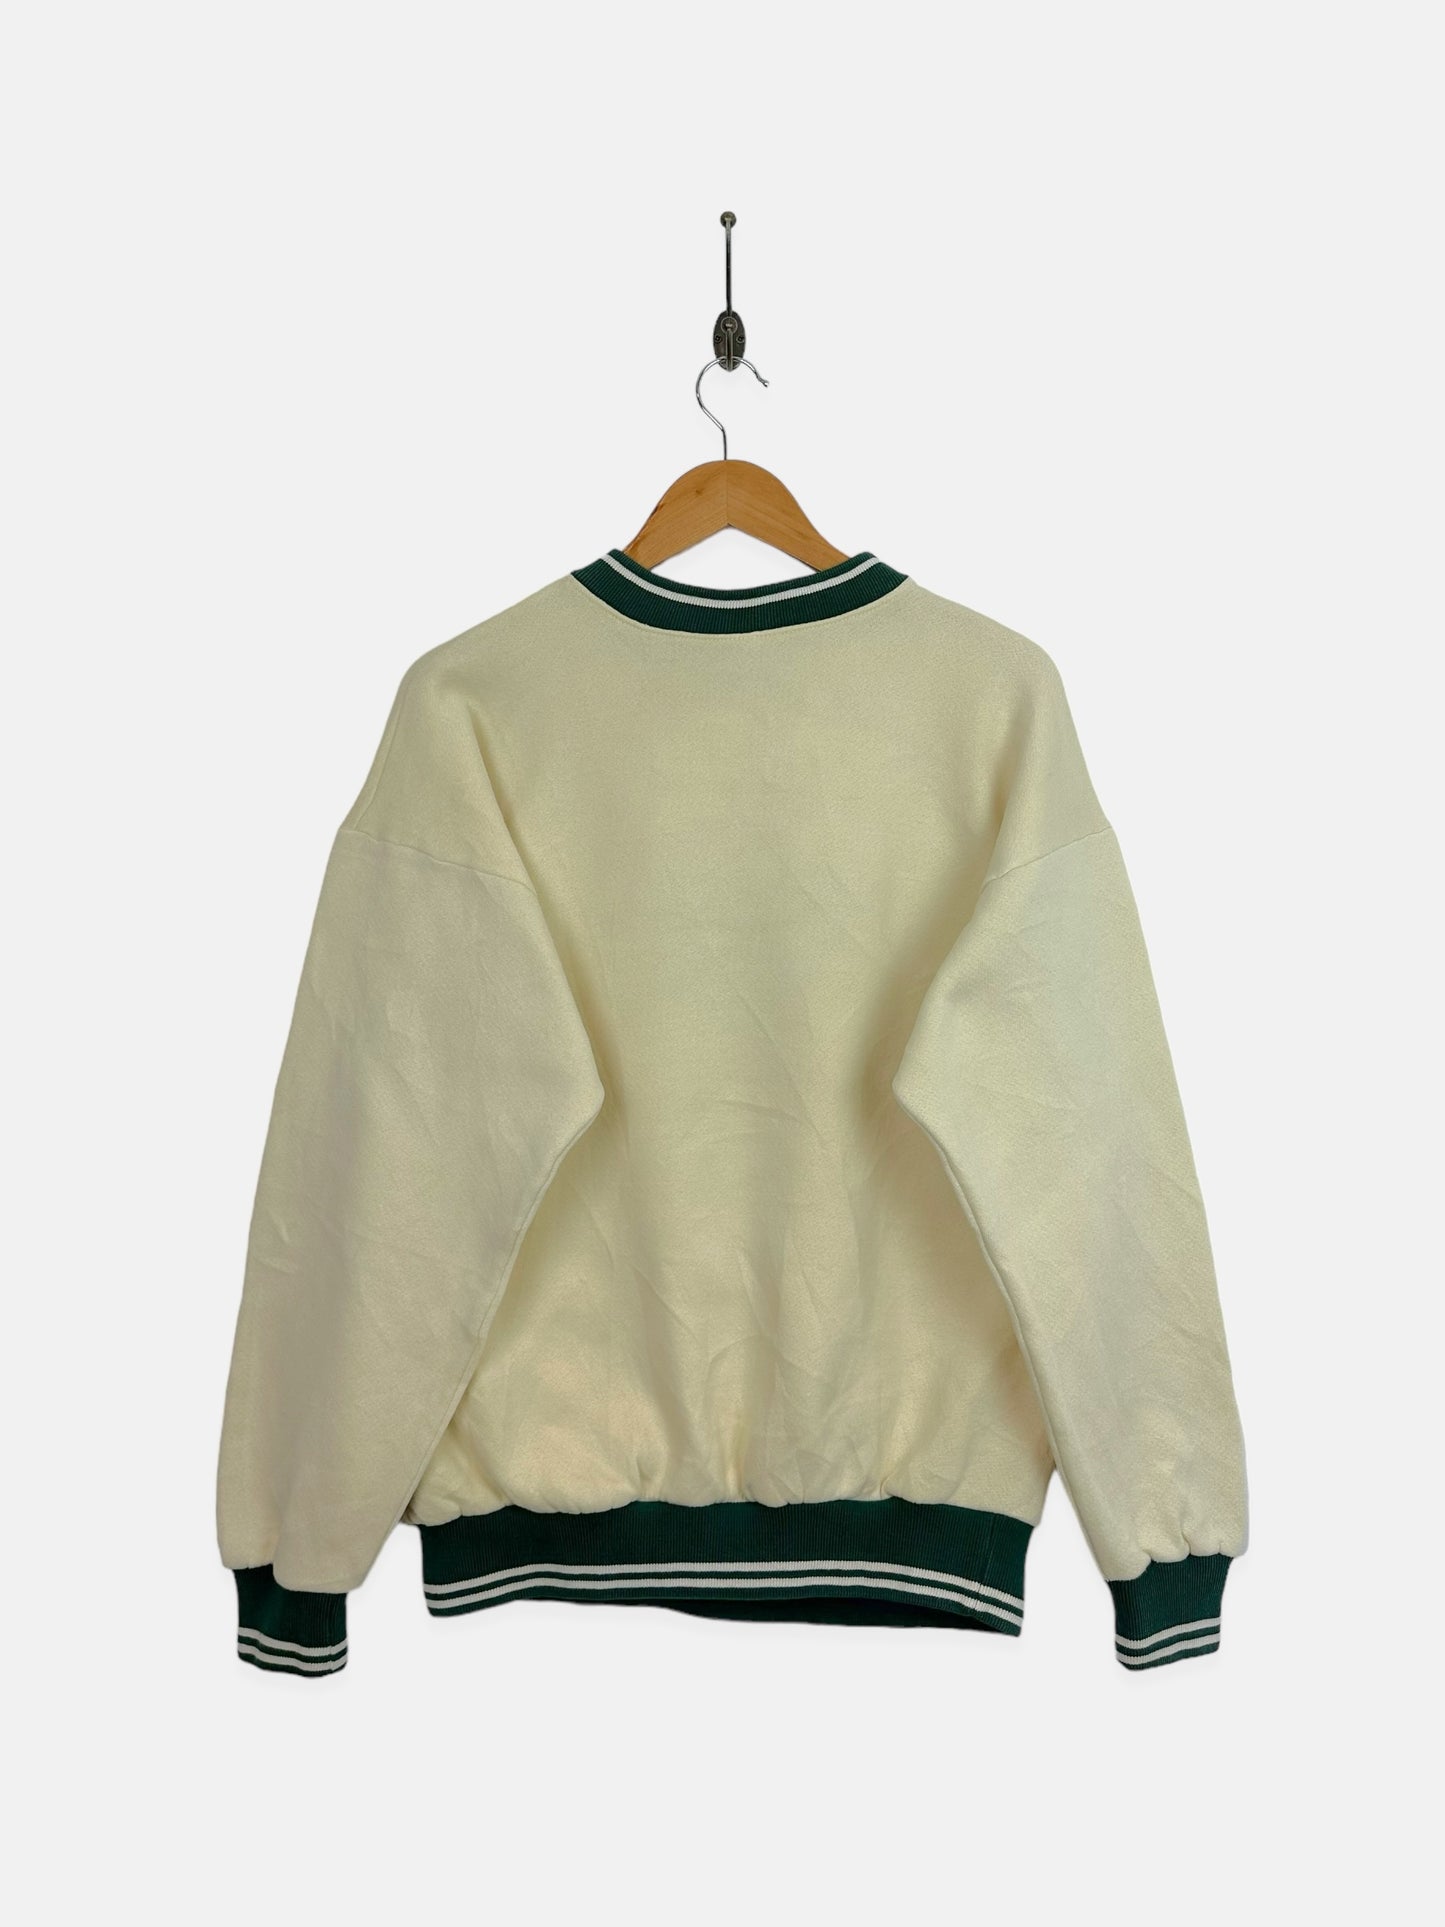 90's Pioneer USA Made Embroidered Vintage Sweatshirt Size 10-12